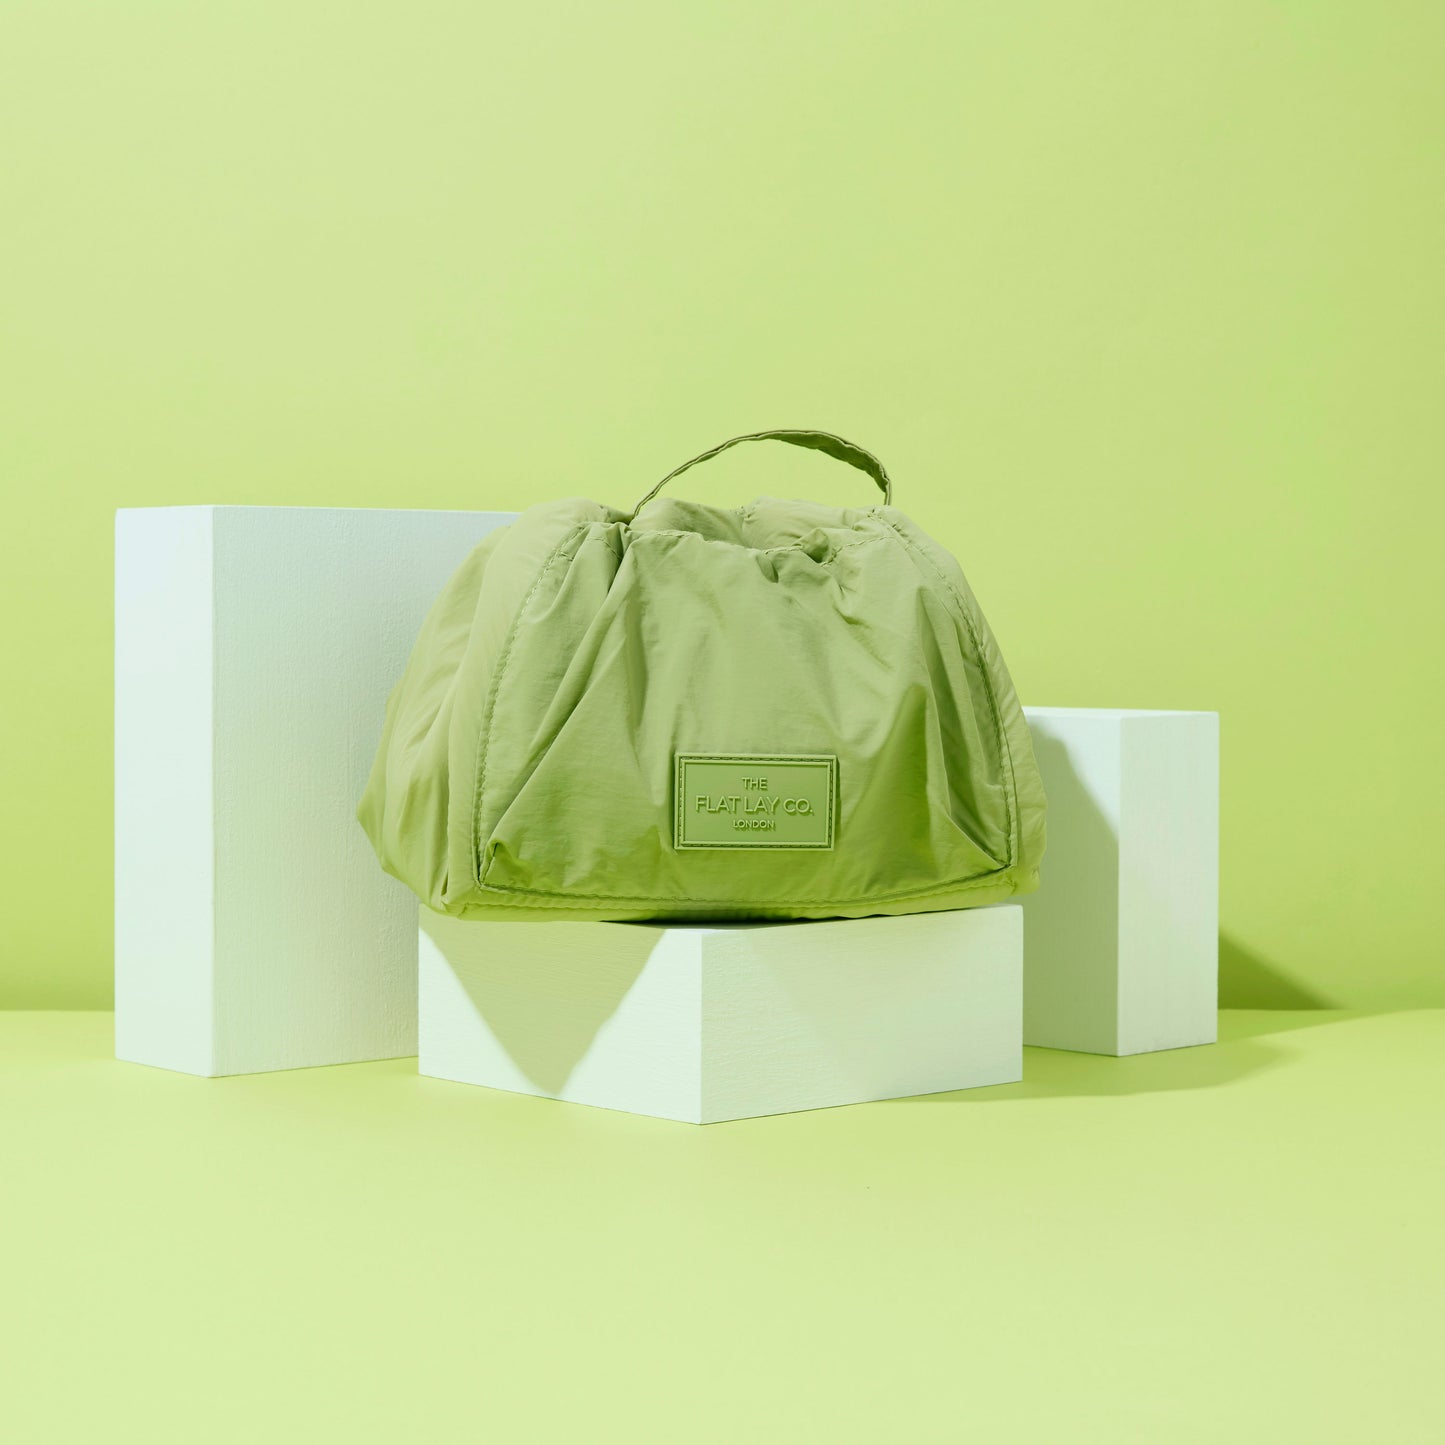 The Flat Lay Co. Drawstring Makeup Bag in Light Green Parachute